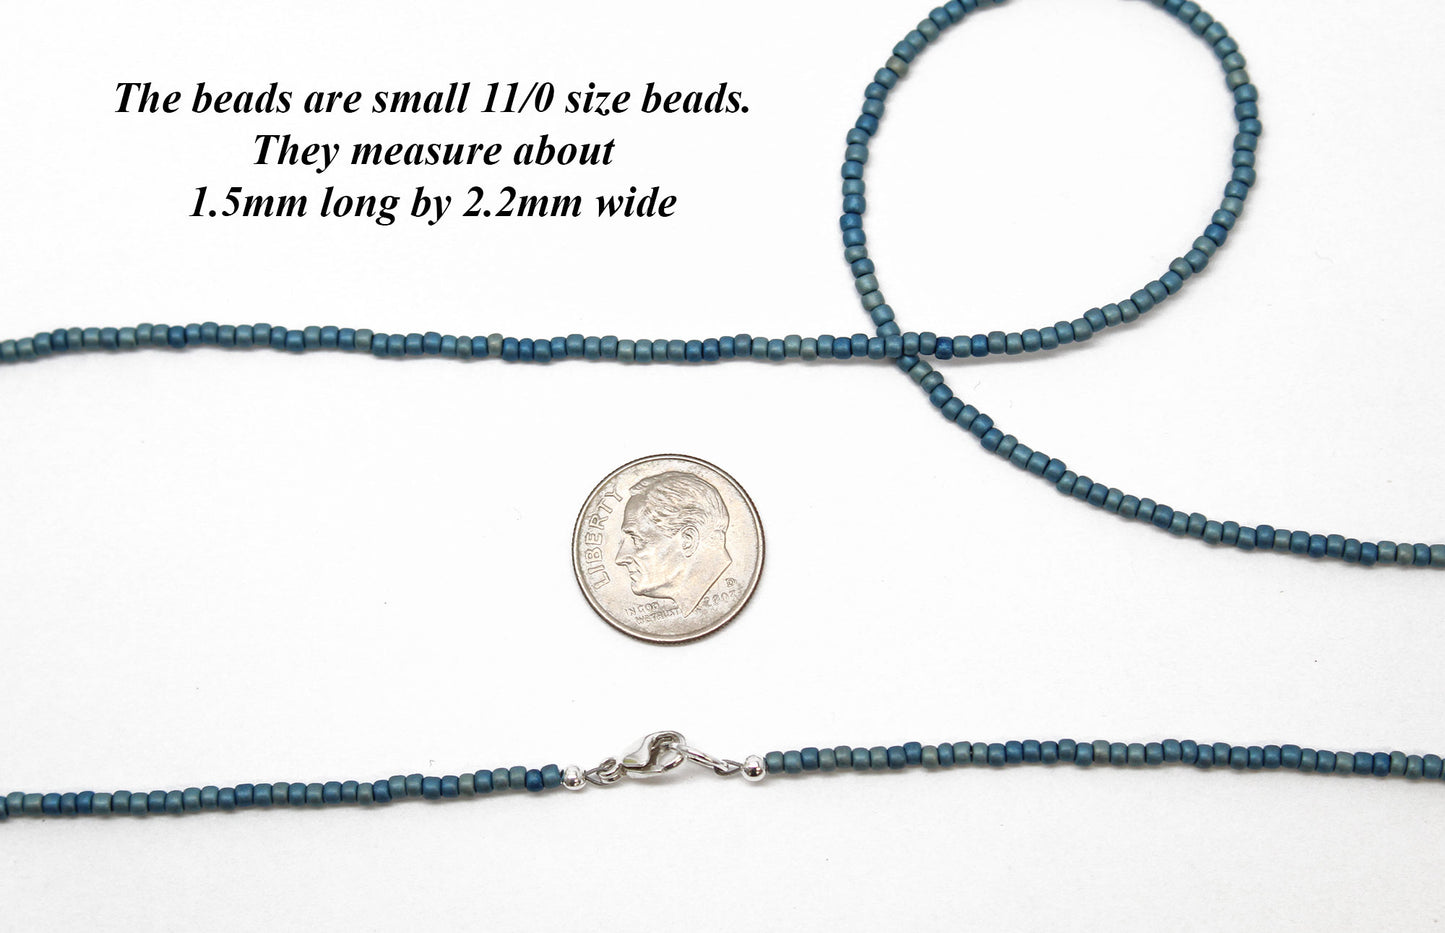 Blue Seed Bead Necklace-Medium Blue-Single Strand